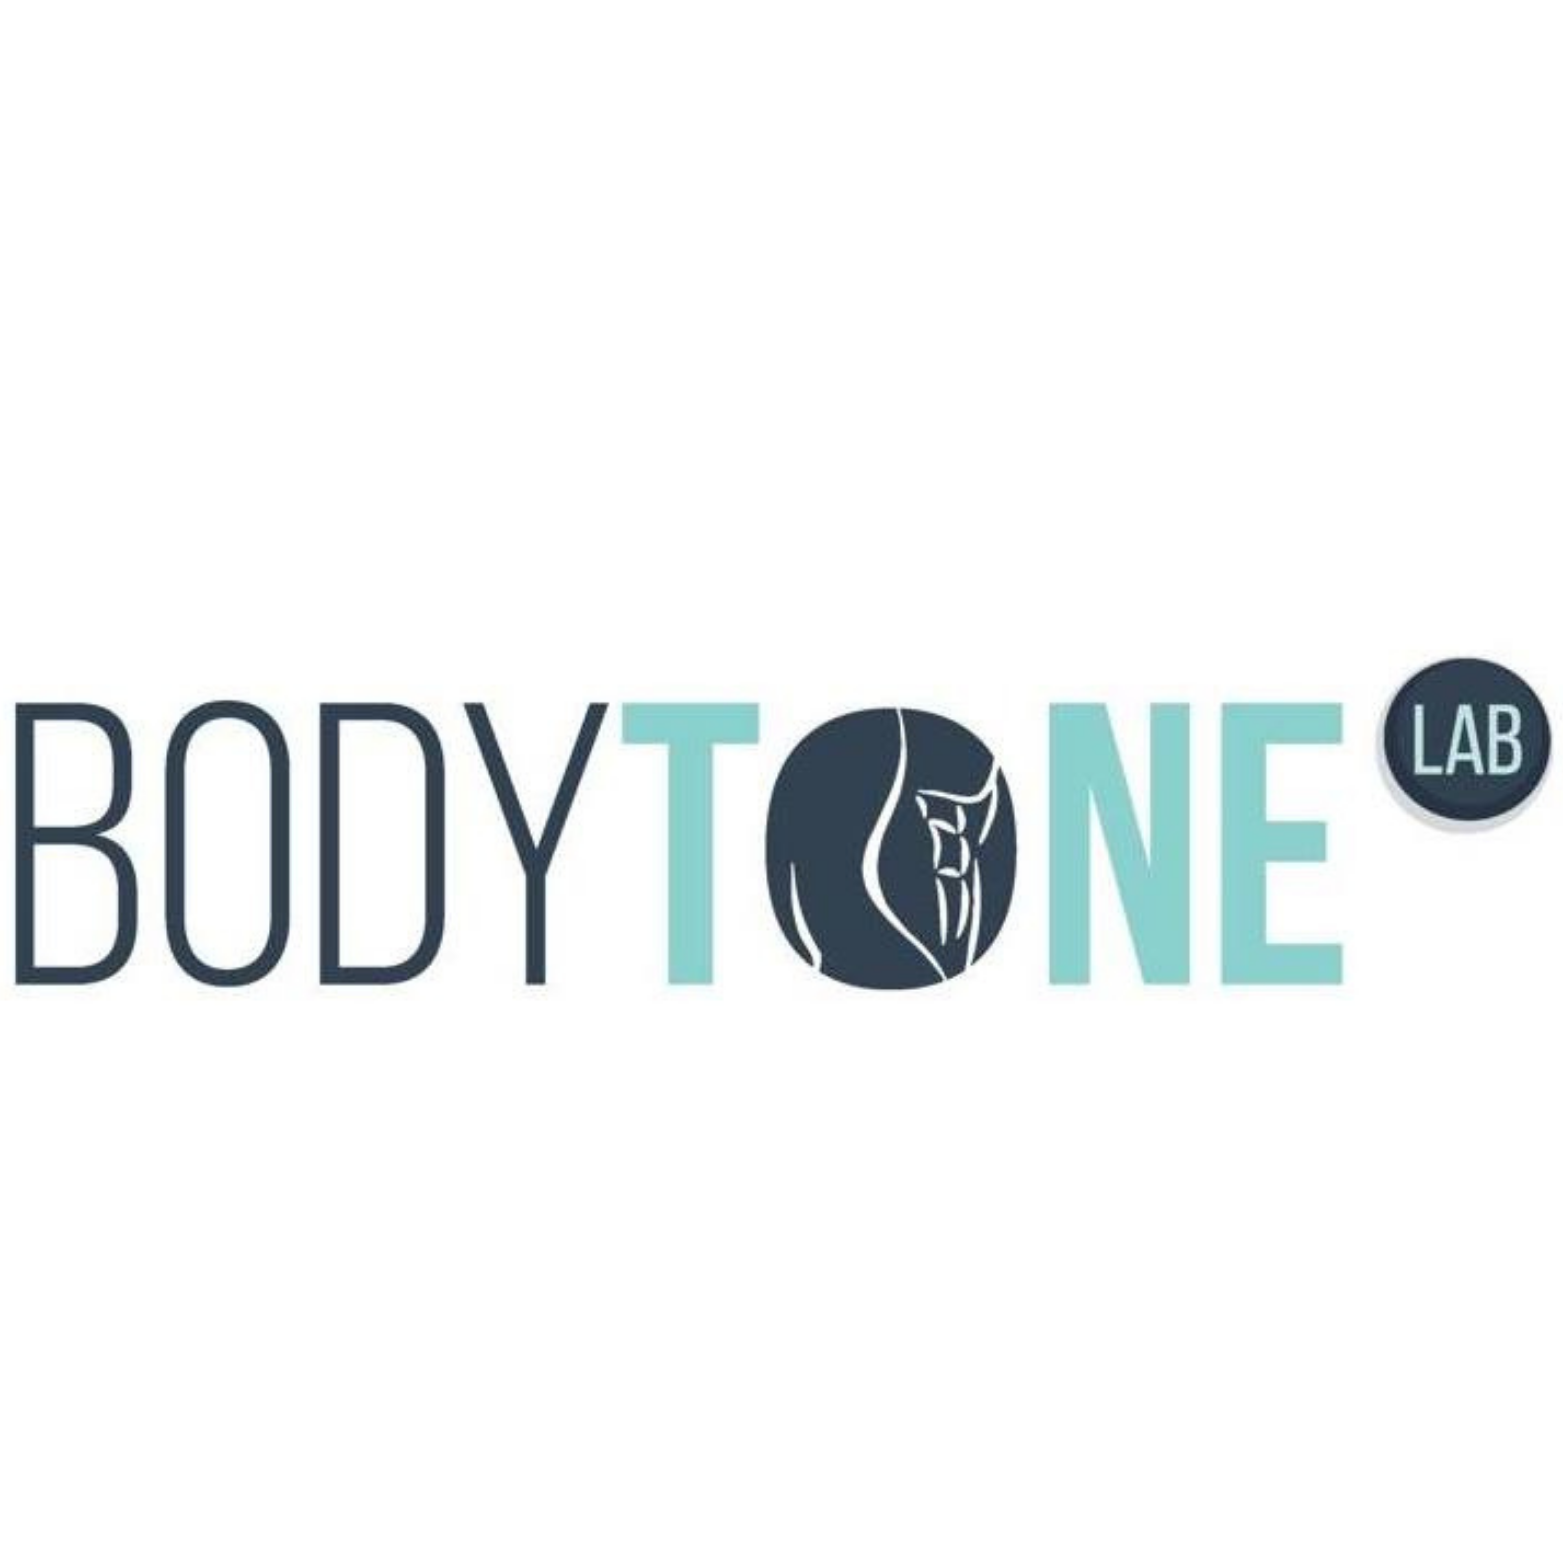 Body Tone Lab